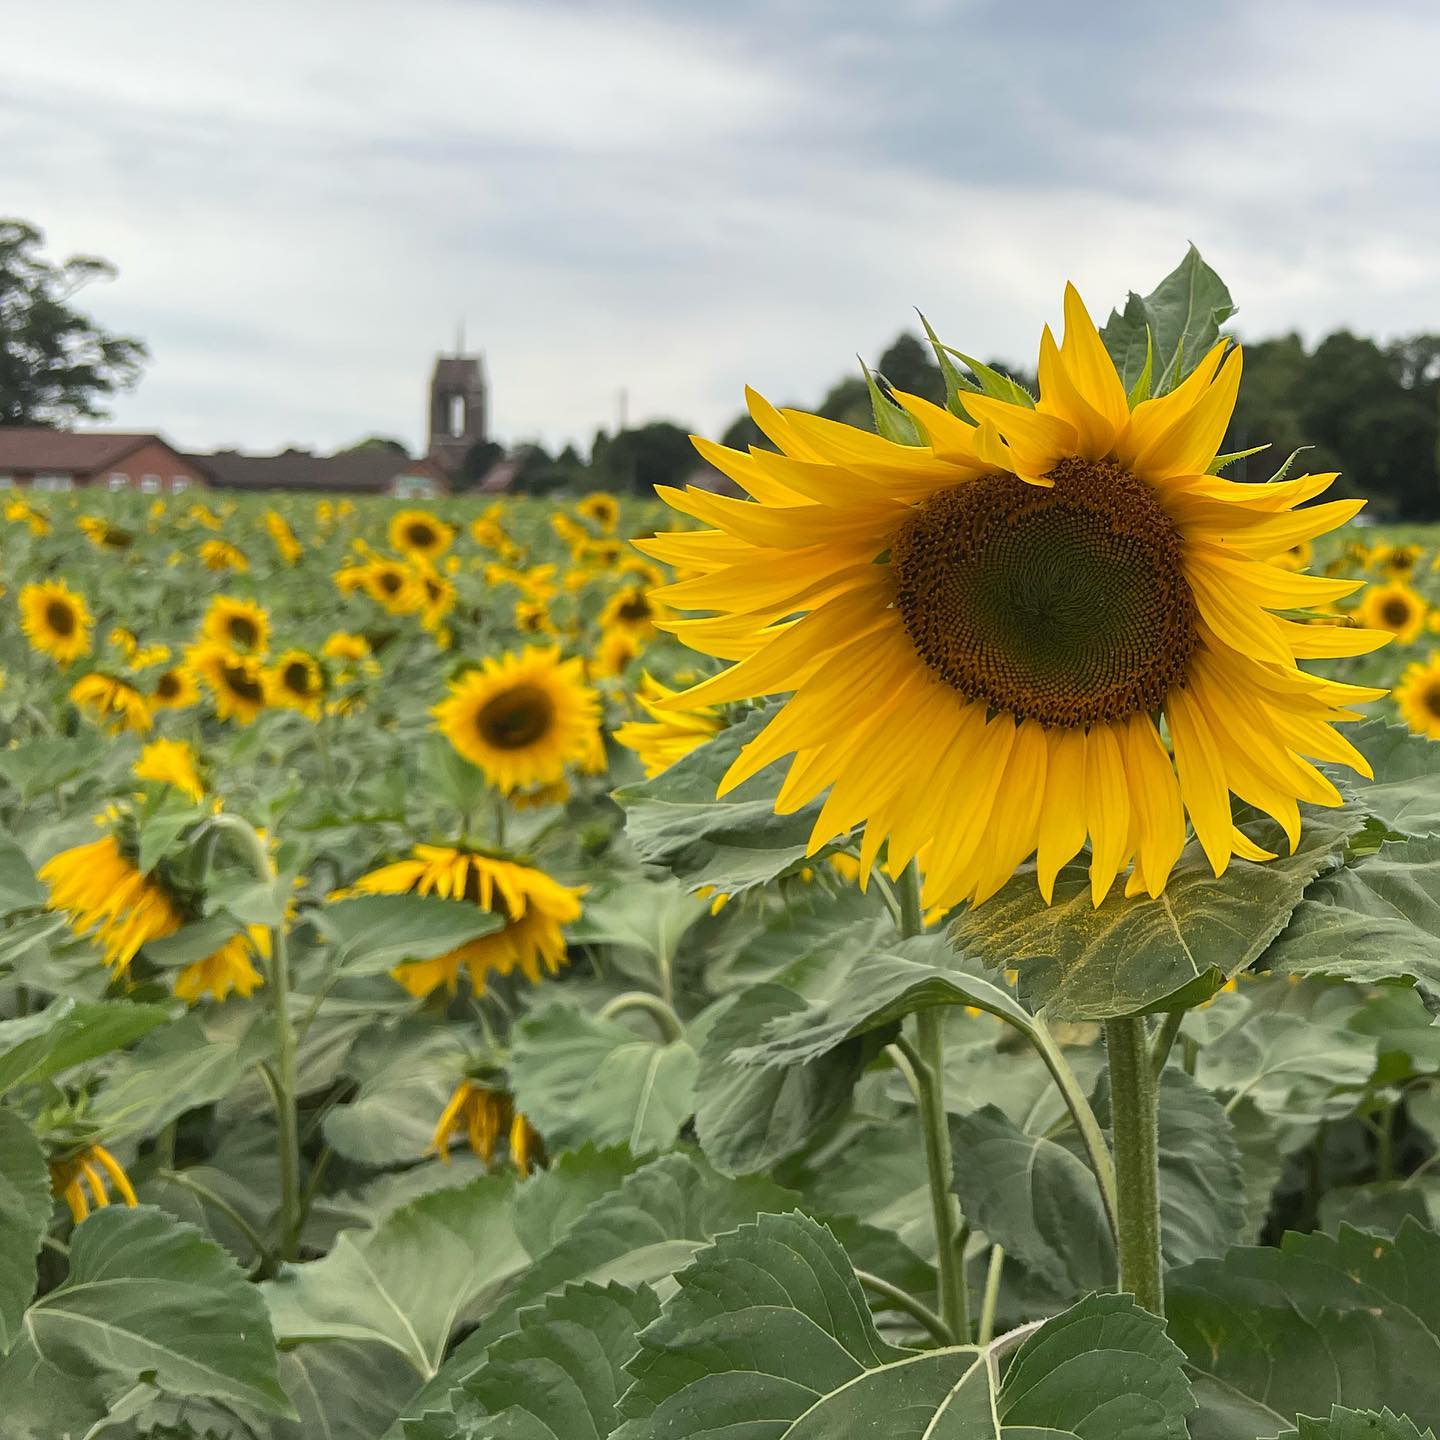 Sunny sunflowers 🌻 
———
#bbcmidlands #igersbirminghamuk #beckettsfarm #gloriousbritain #everything_imaginable #picturesoftheuk #pictures_of_england #sunflower #visitengland